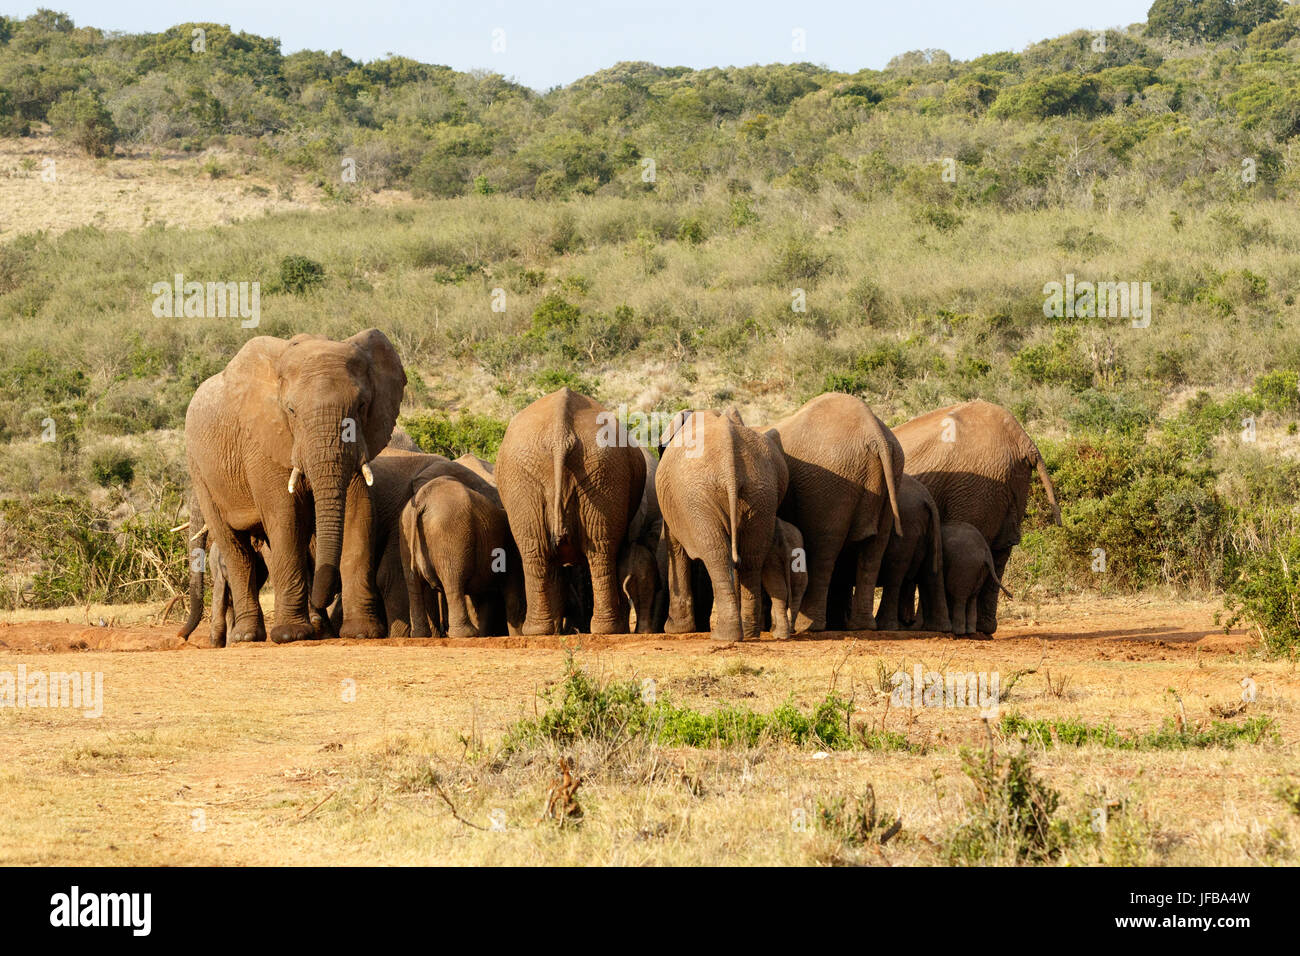 The Female and Baby Elephants gathering Stock Photo